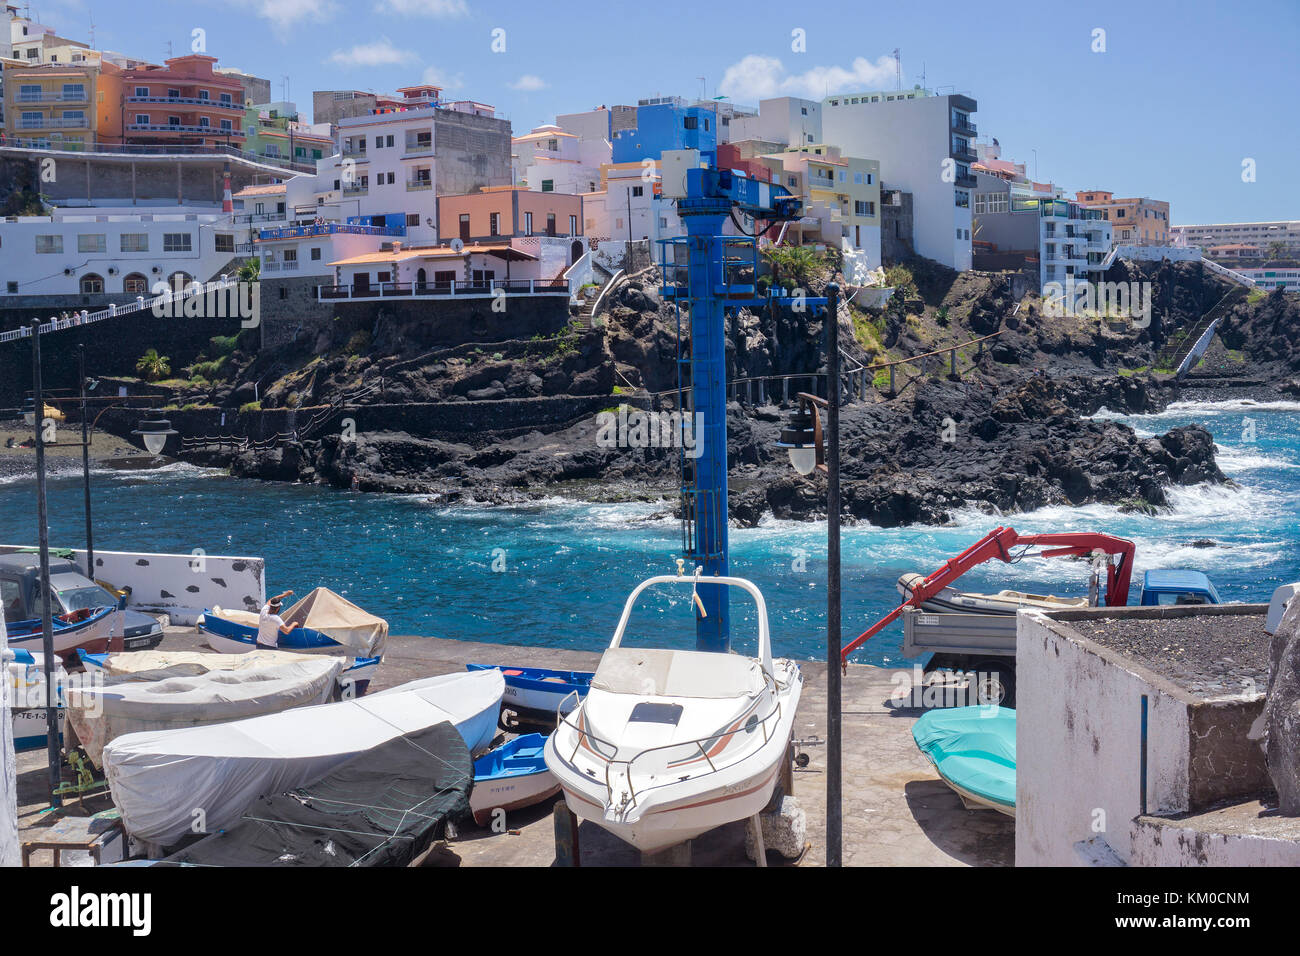 Piscina los chocos, tiny fishing harbour at village Puerto de Santiago, west coast of Tenerife island, Canary islands, Spain Stock Photo